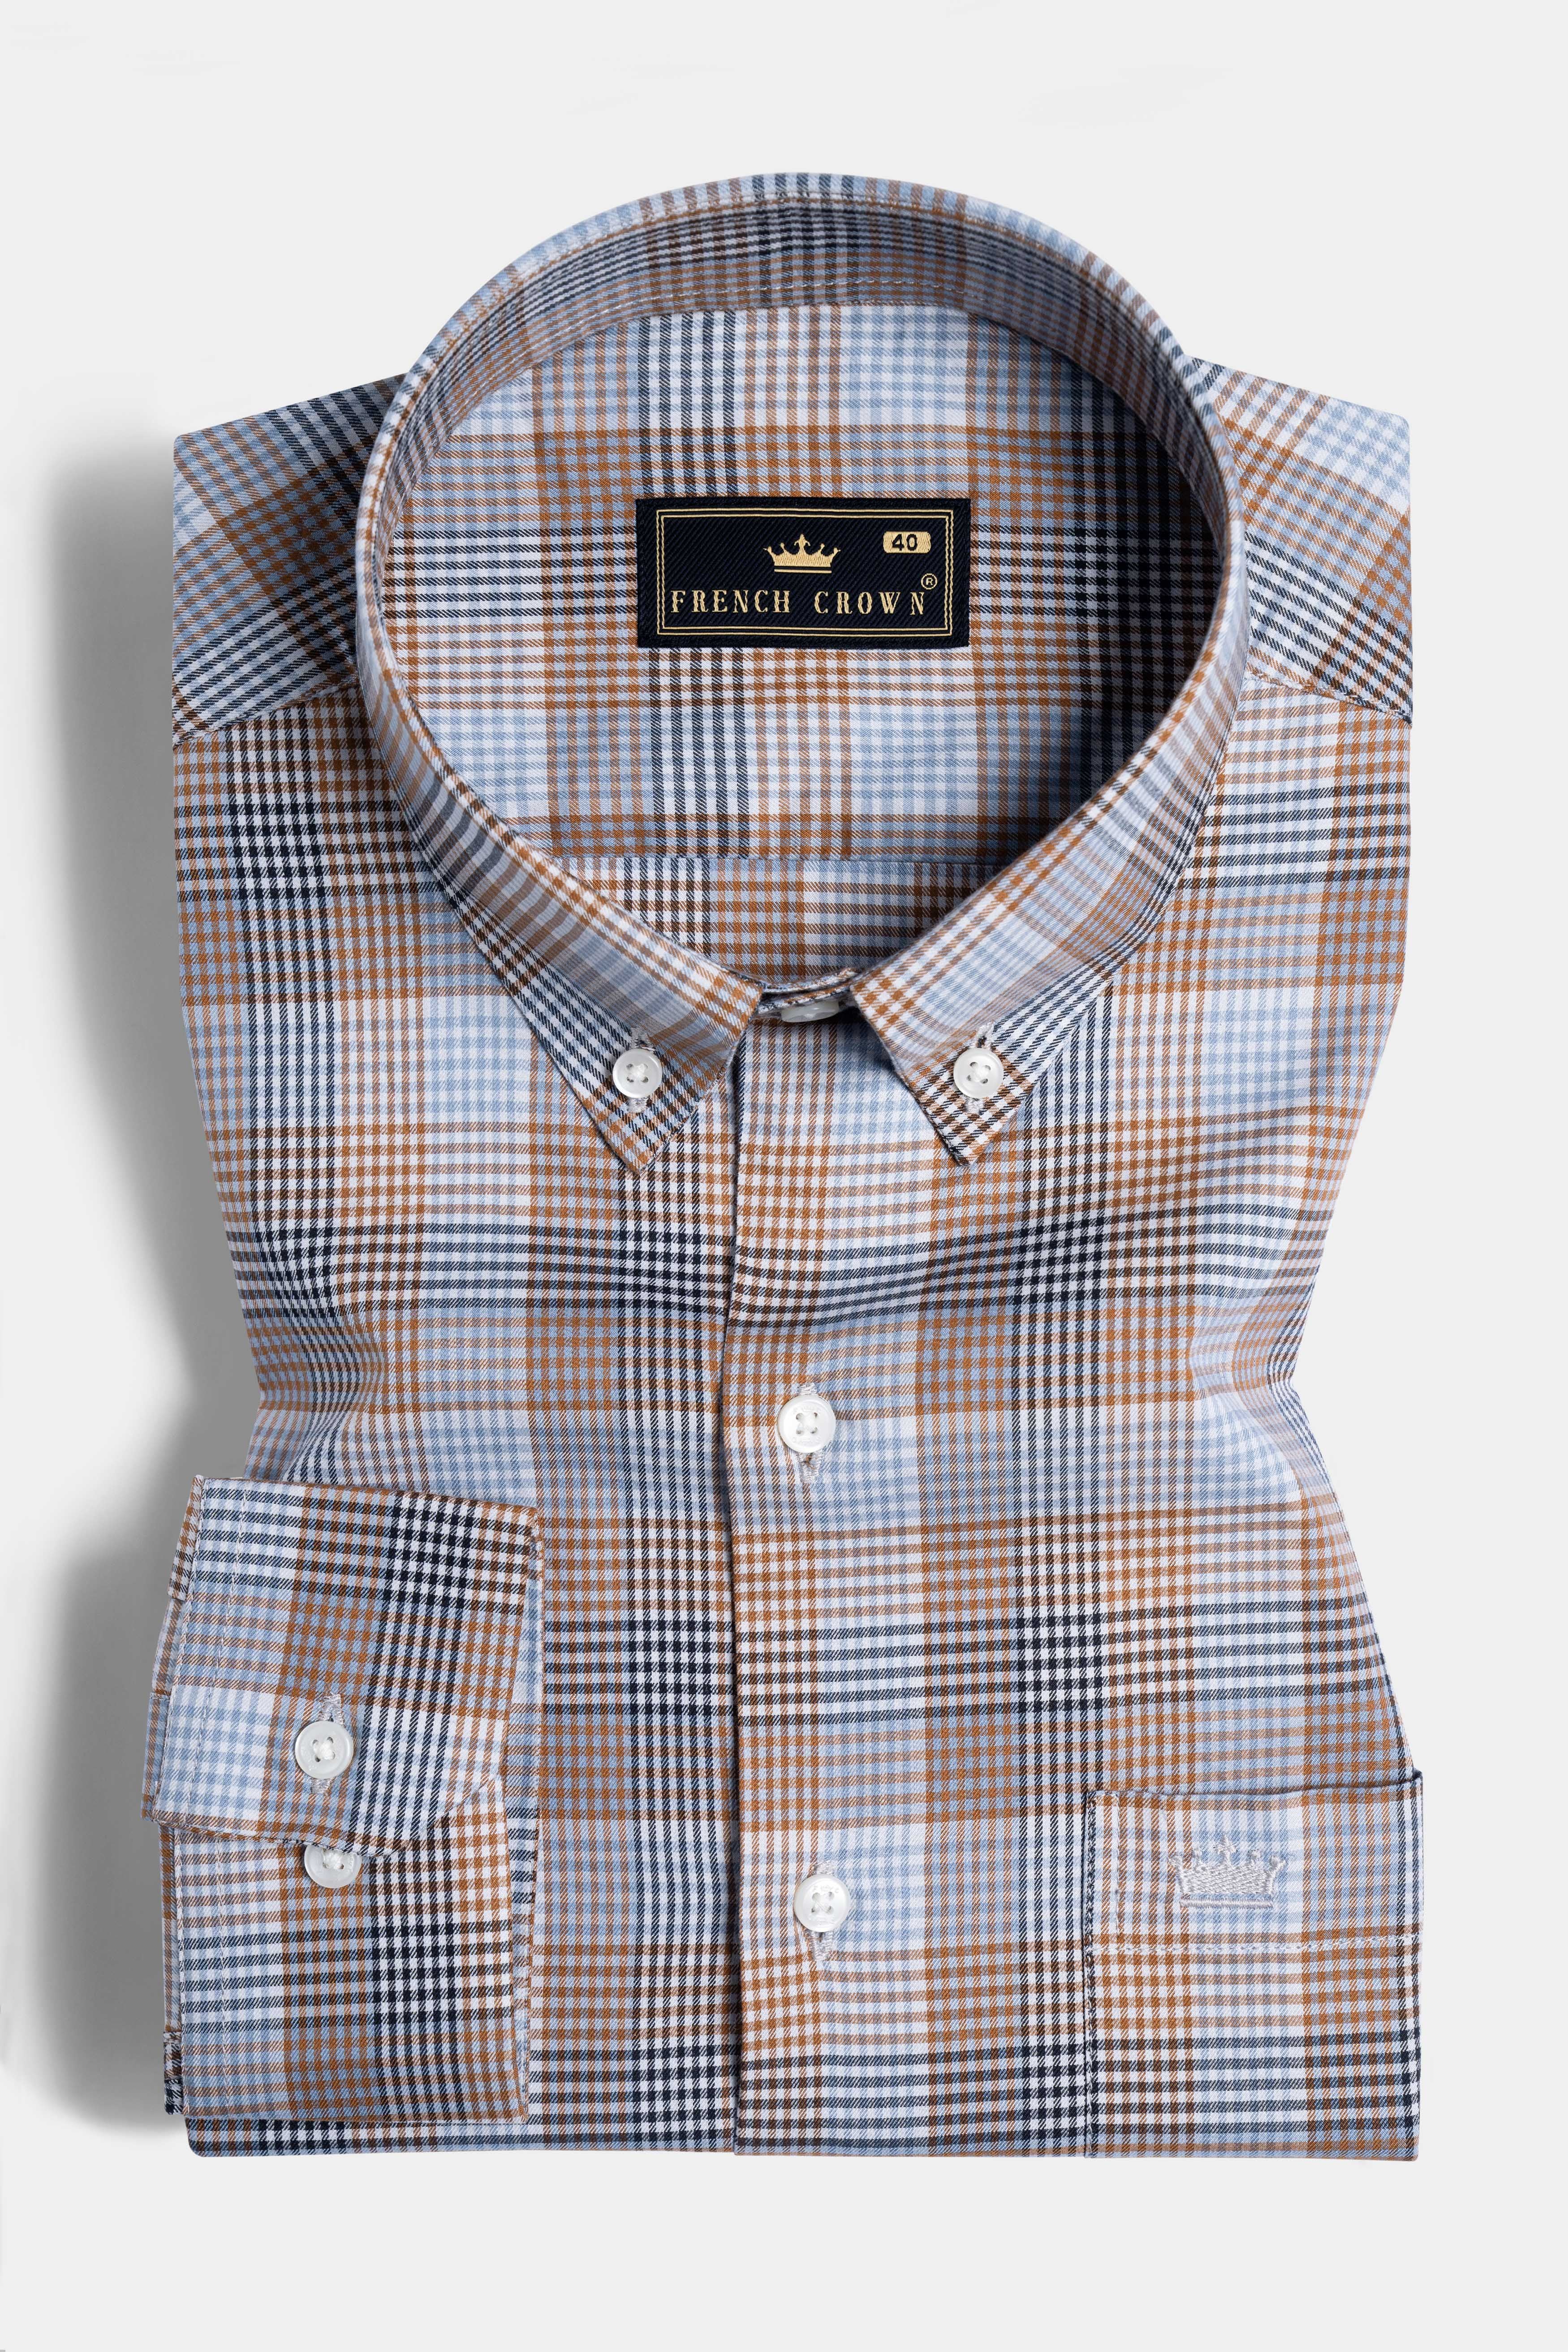 Cumin Brown with Malibu Blue and White Gingham Checkered Twill Premium Cotton Shirt